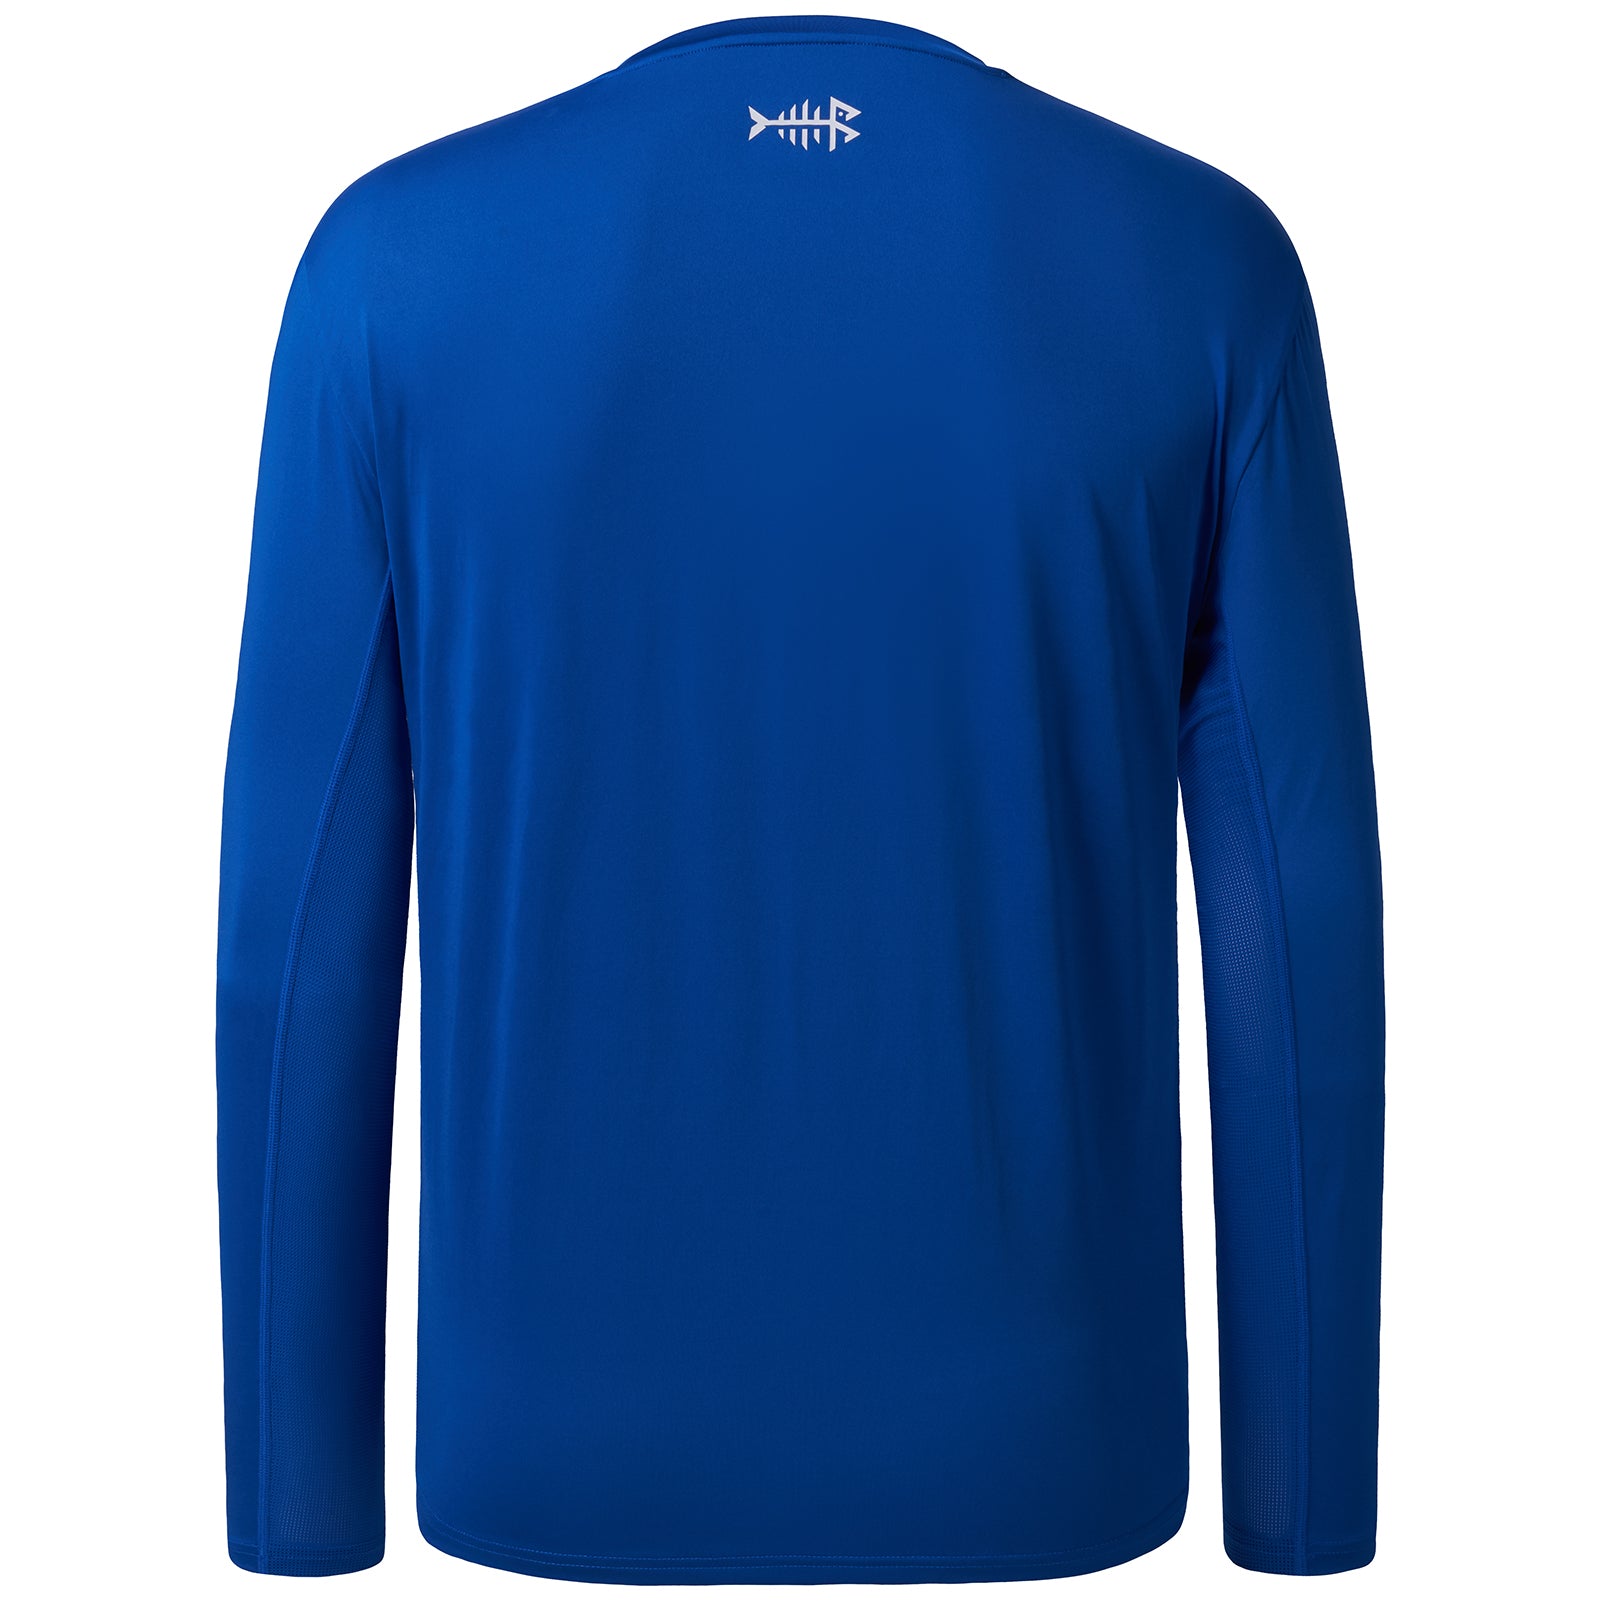  BASSDASH Fishing T Shirts for Men UV Sun Protection UPF 50+  Long Sleeve Tee T-Shirt : Clothing, Shoes & Jewelry